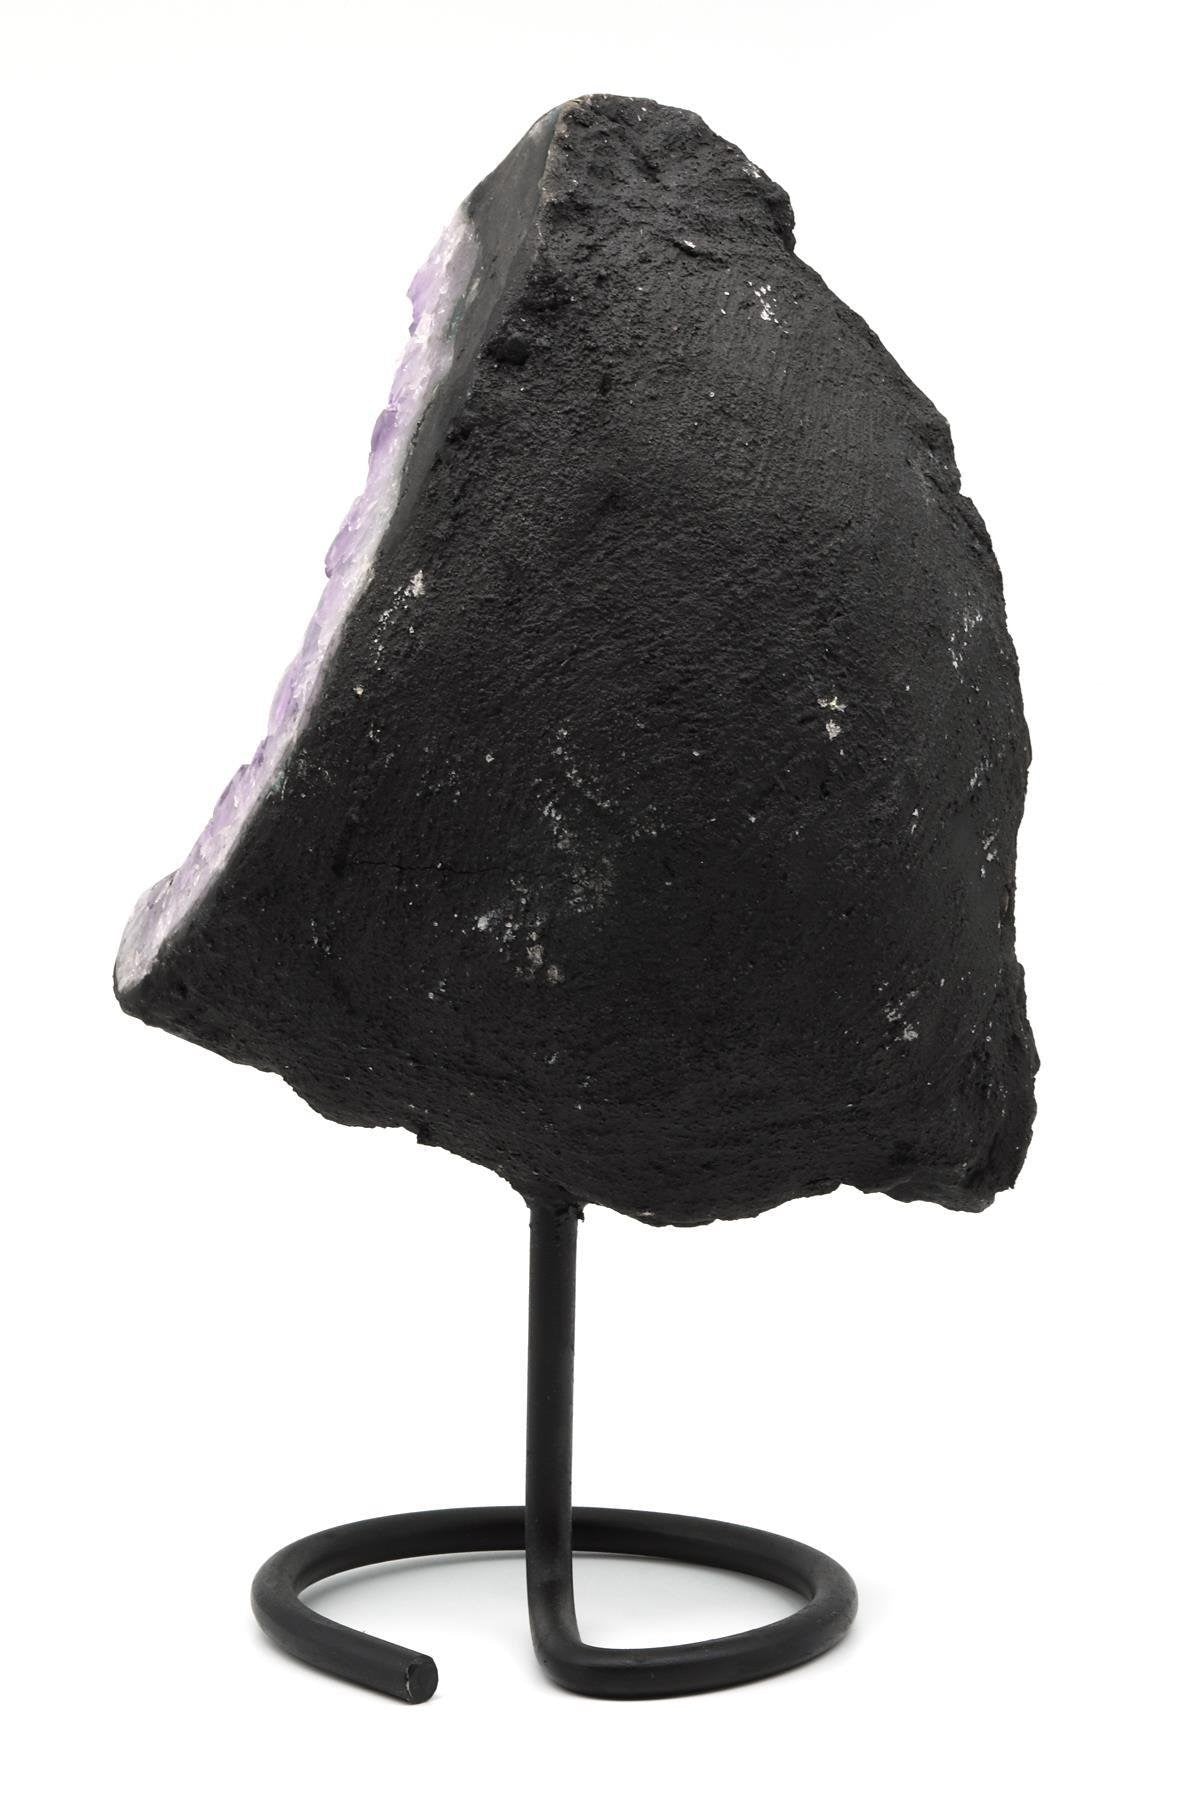 Large Brazilian Amethyst Geode on Metal Stand